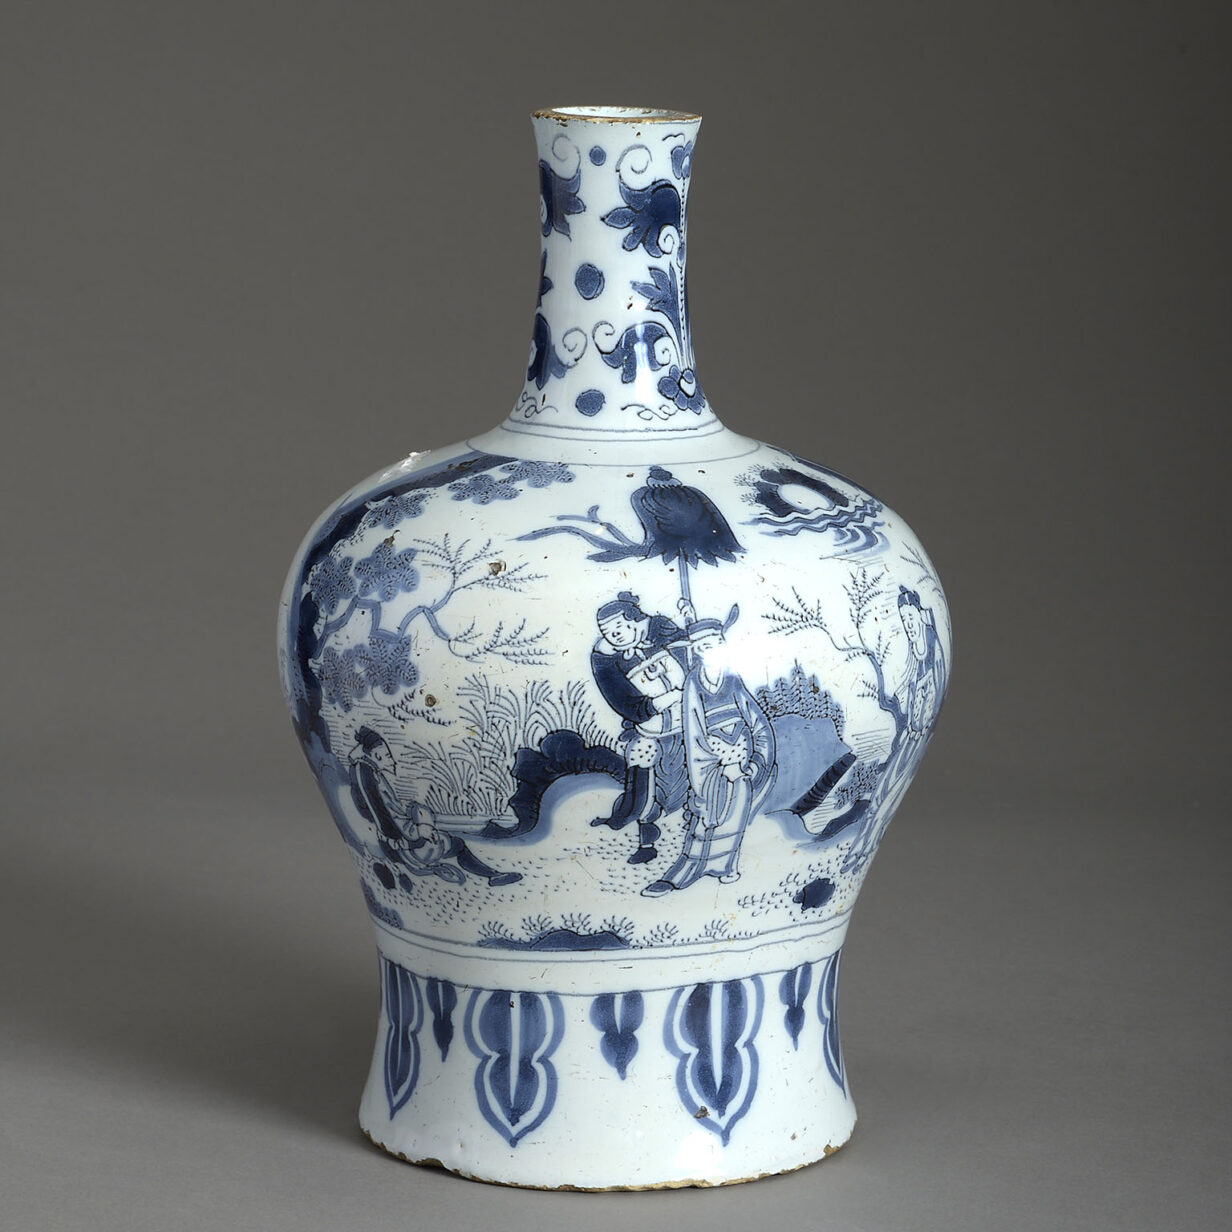 Late 18th century blue and white glazed delft vase